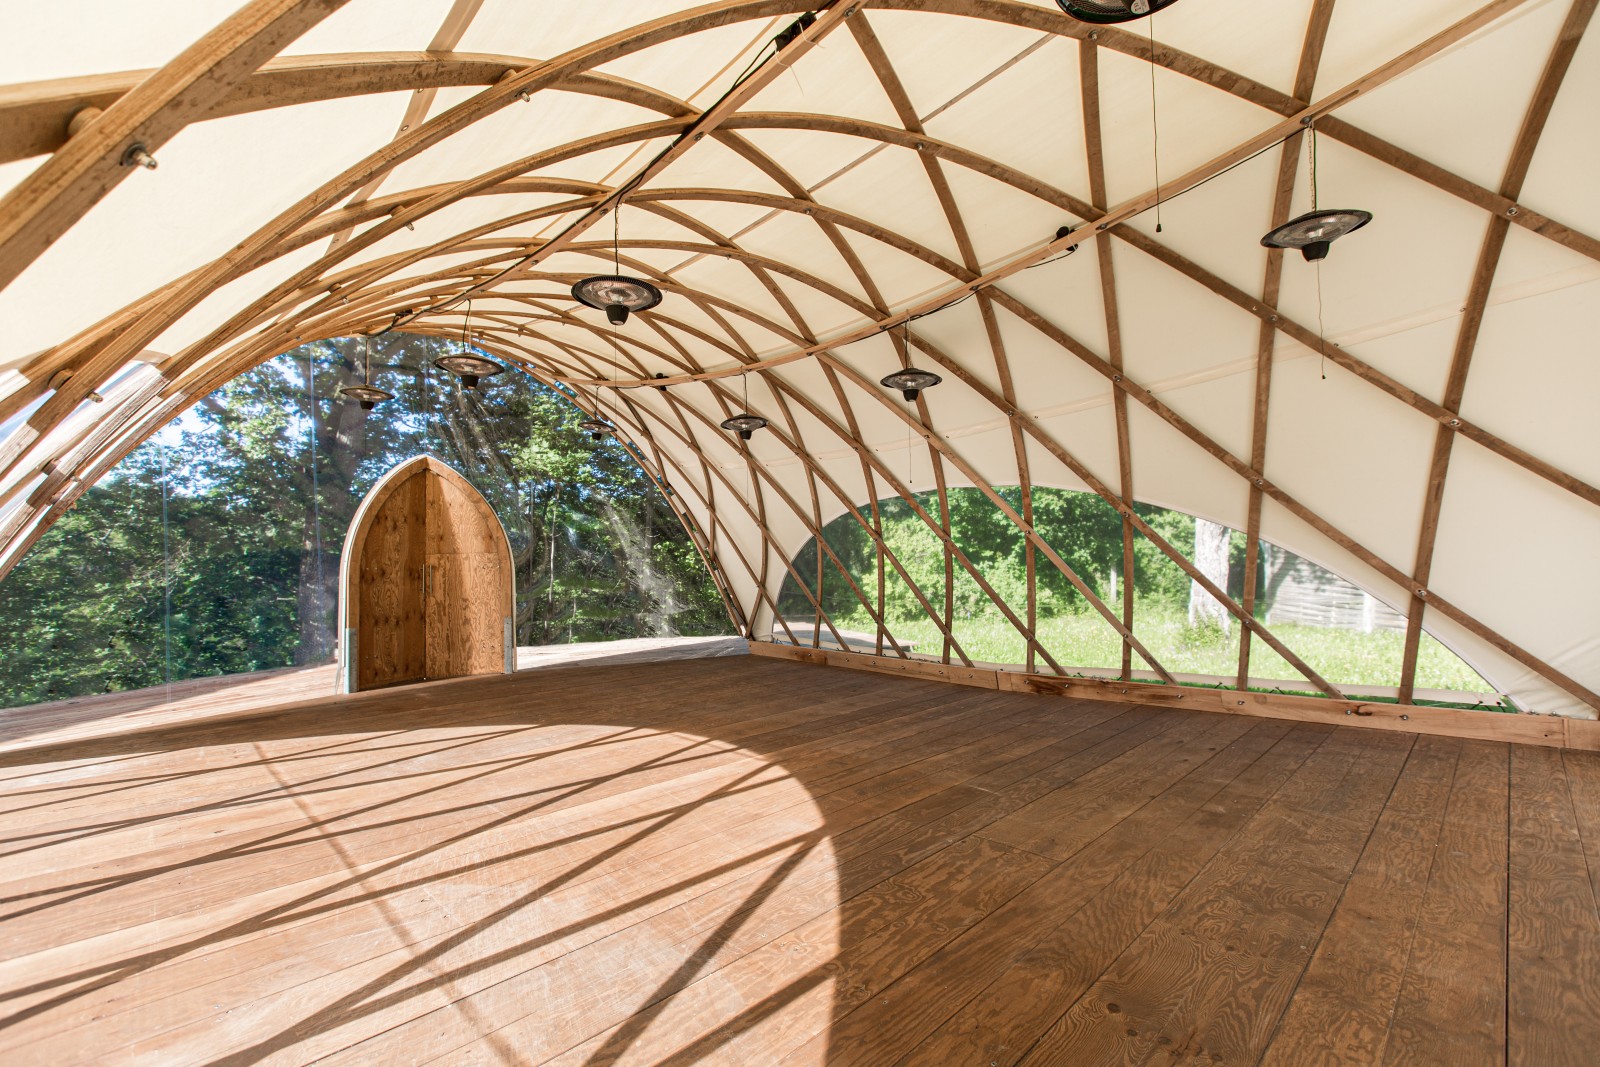 Freie Fläche im Holz Pavillon - Natur trifft auf Ästhetik